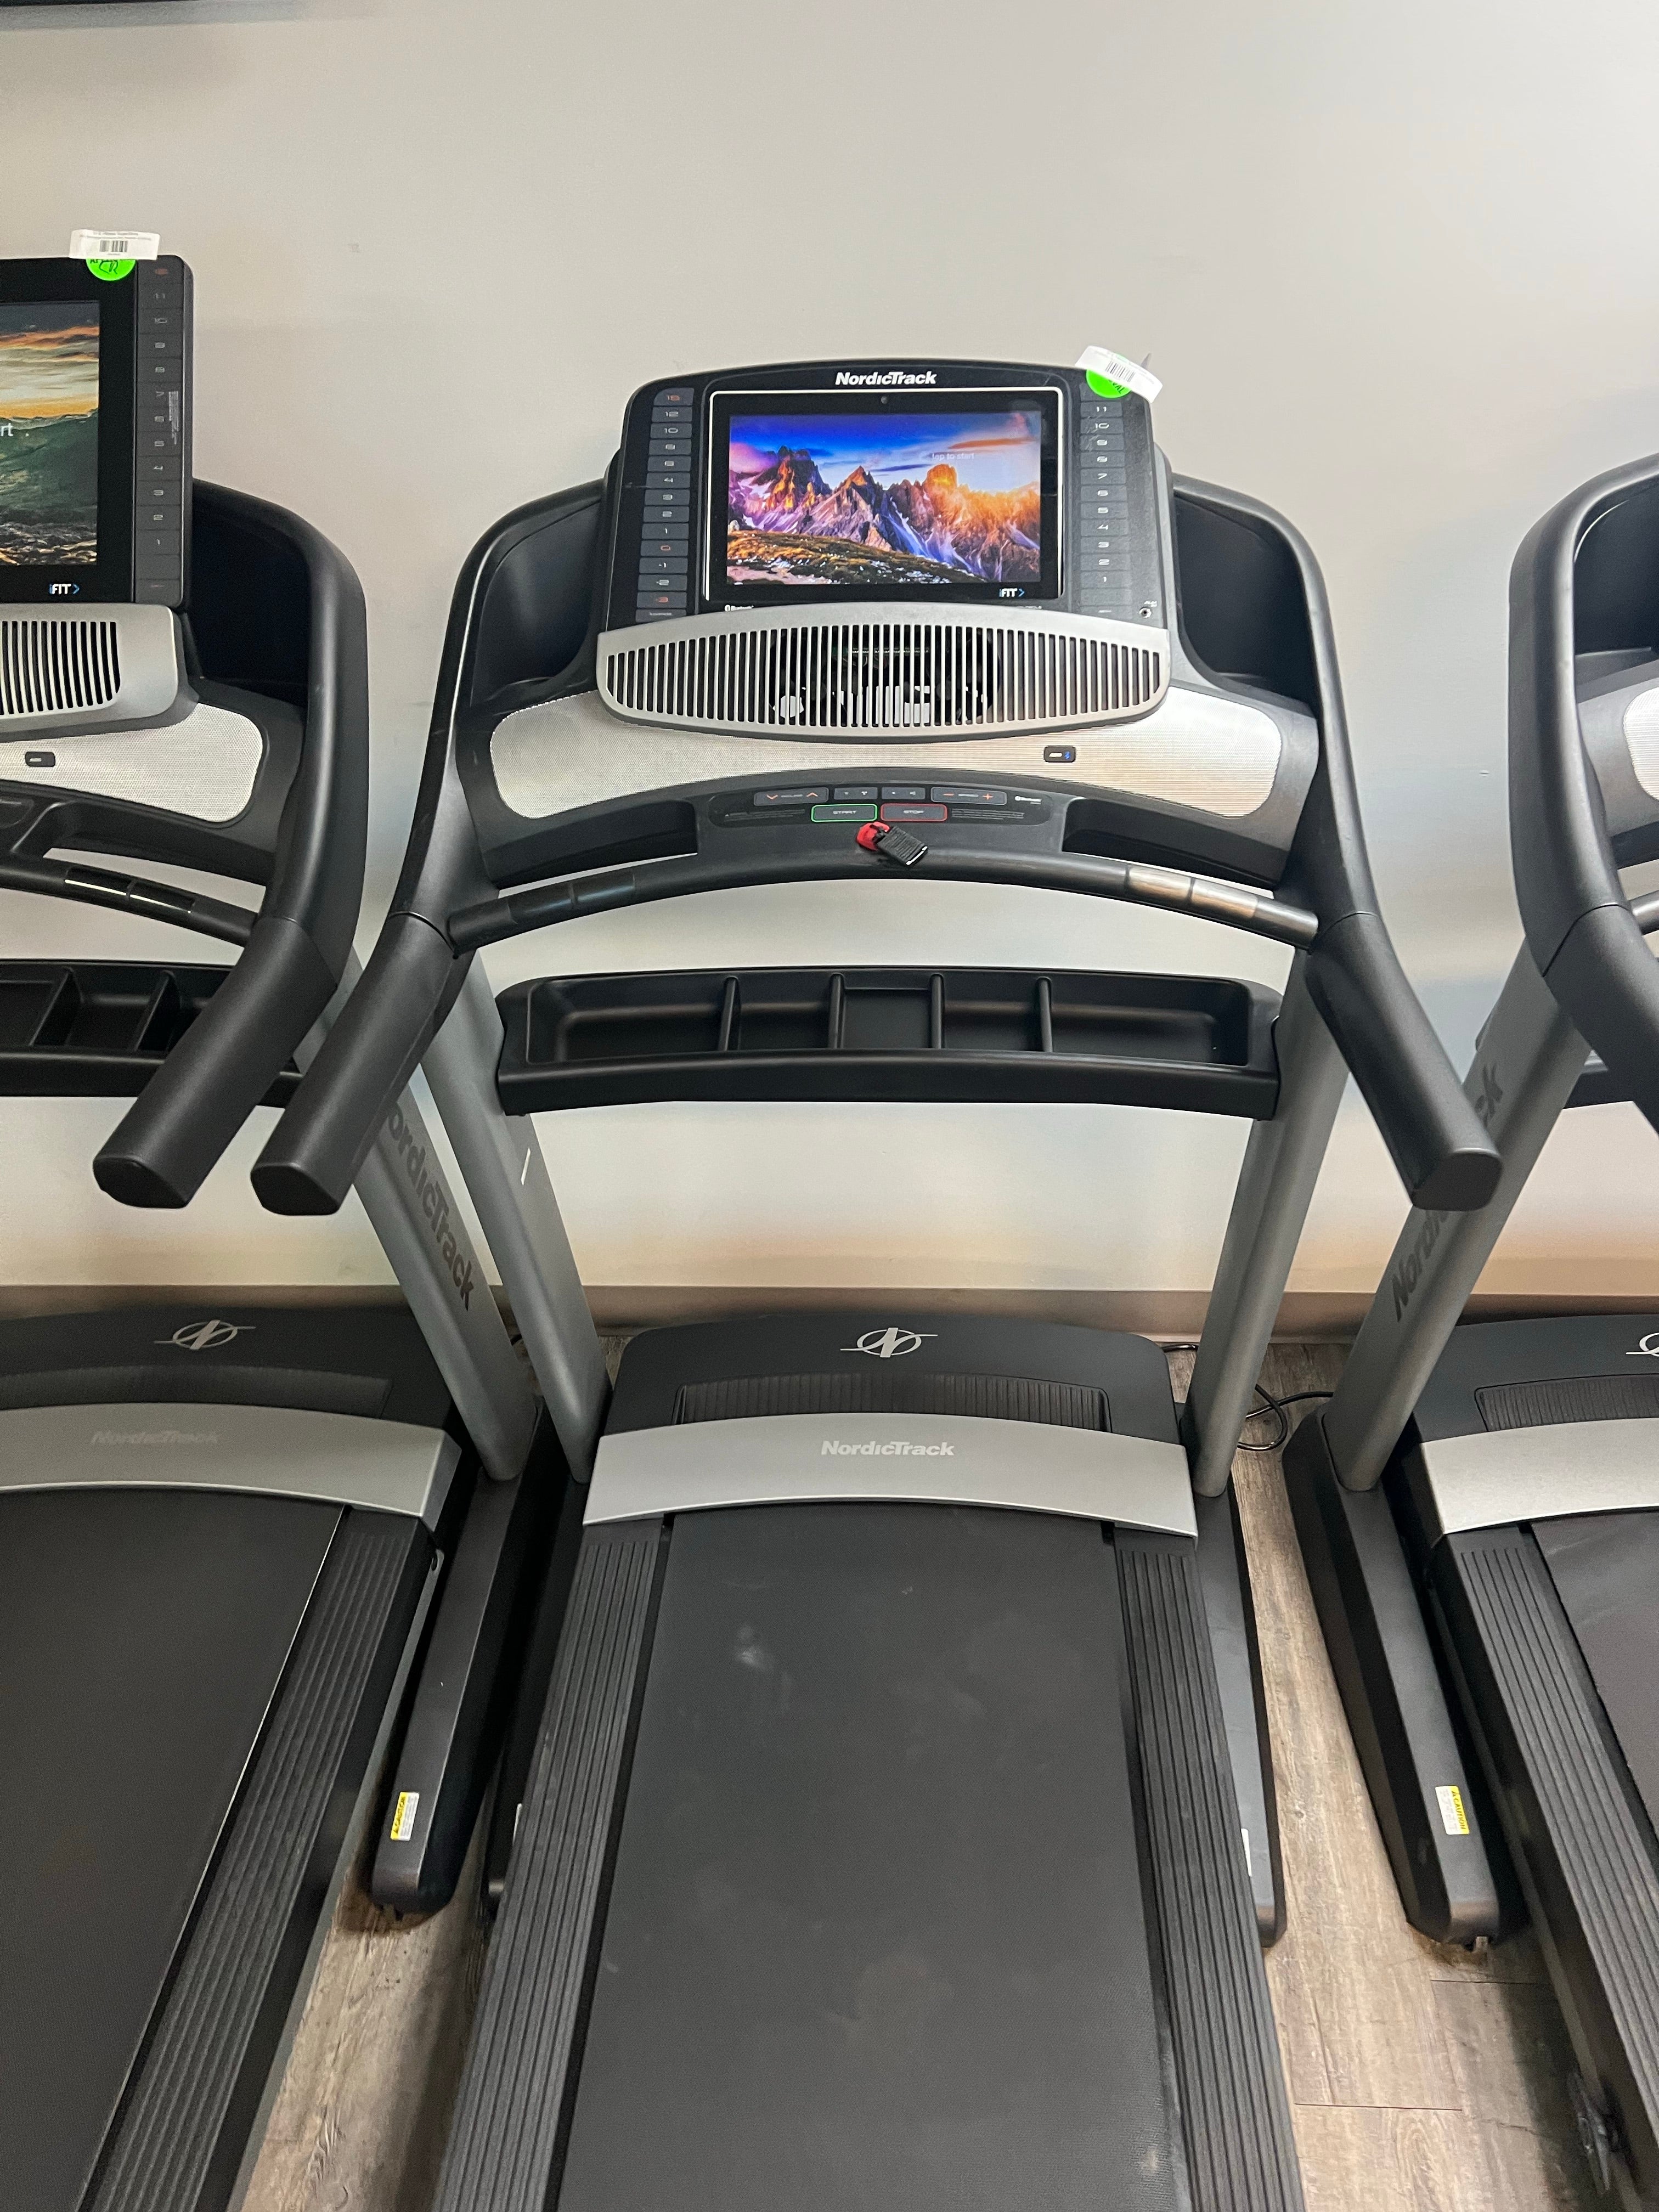 2021 Nordictrack 2450 Commercial Treadmill